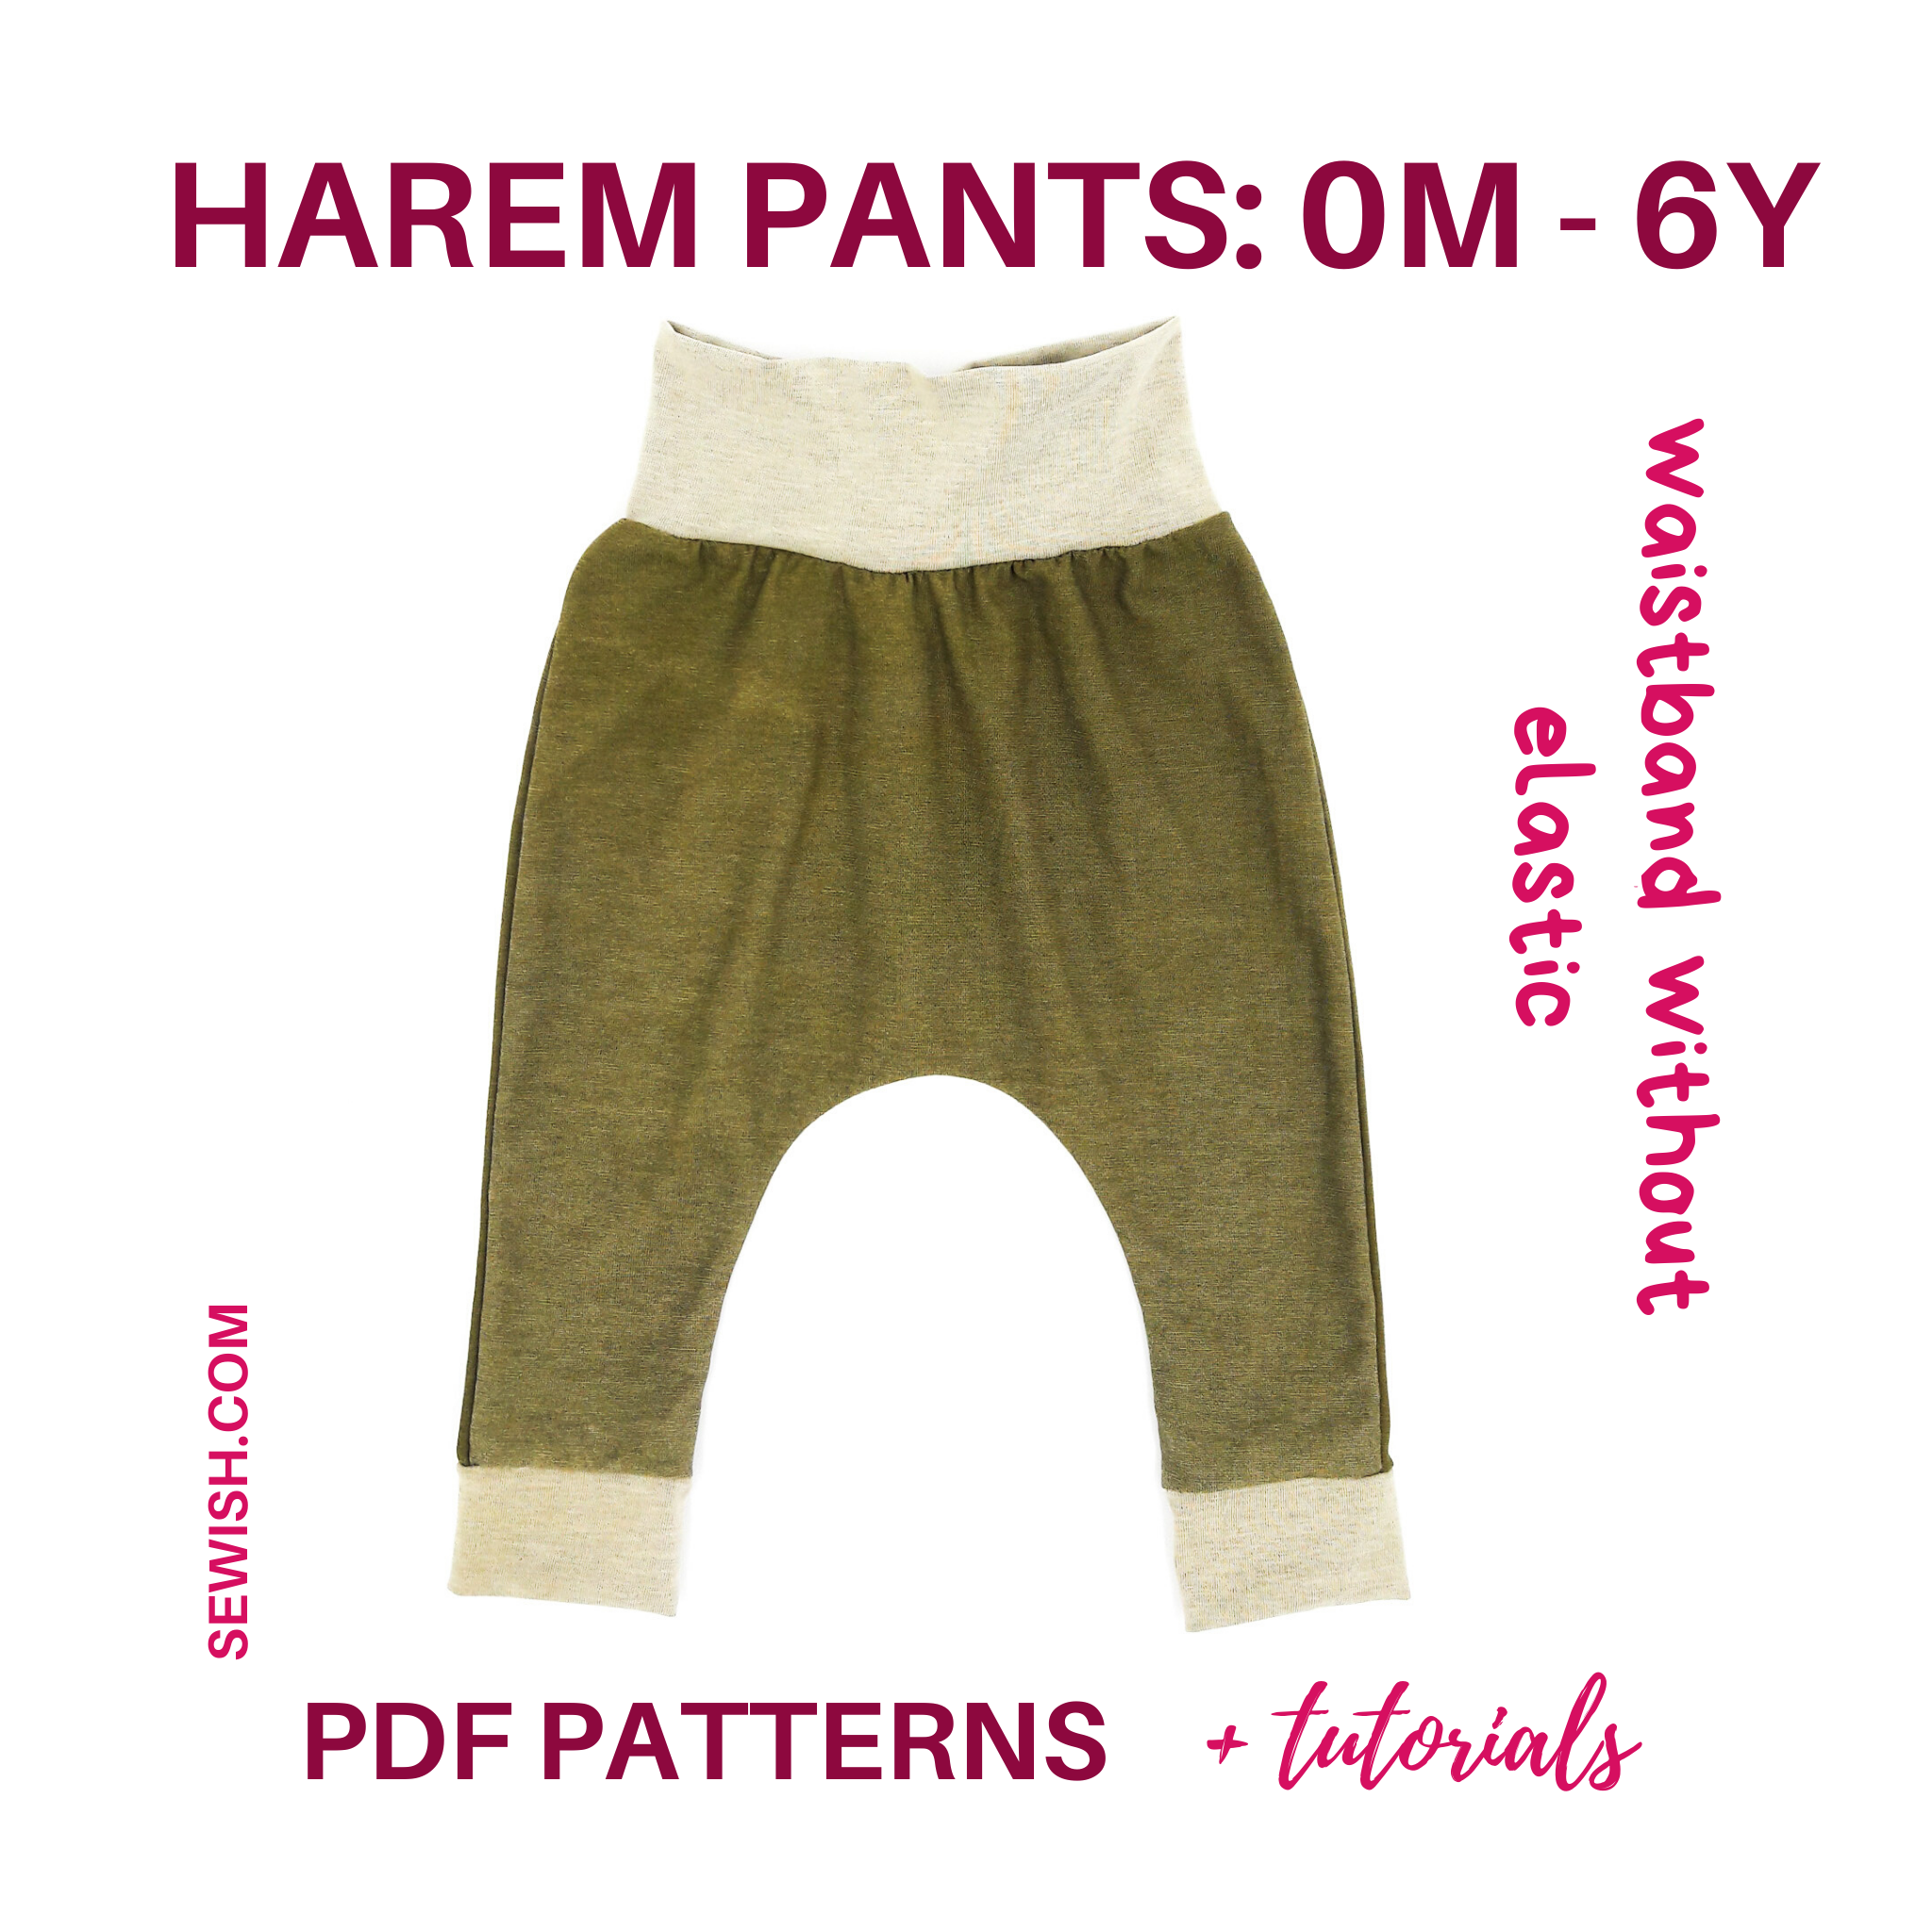 49 Stylish Sewing Patterns for Women's Pants (12 FREE PDF's)